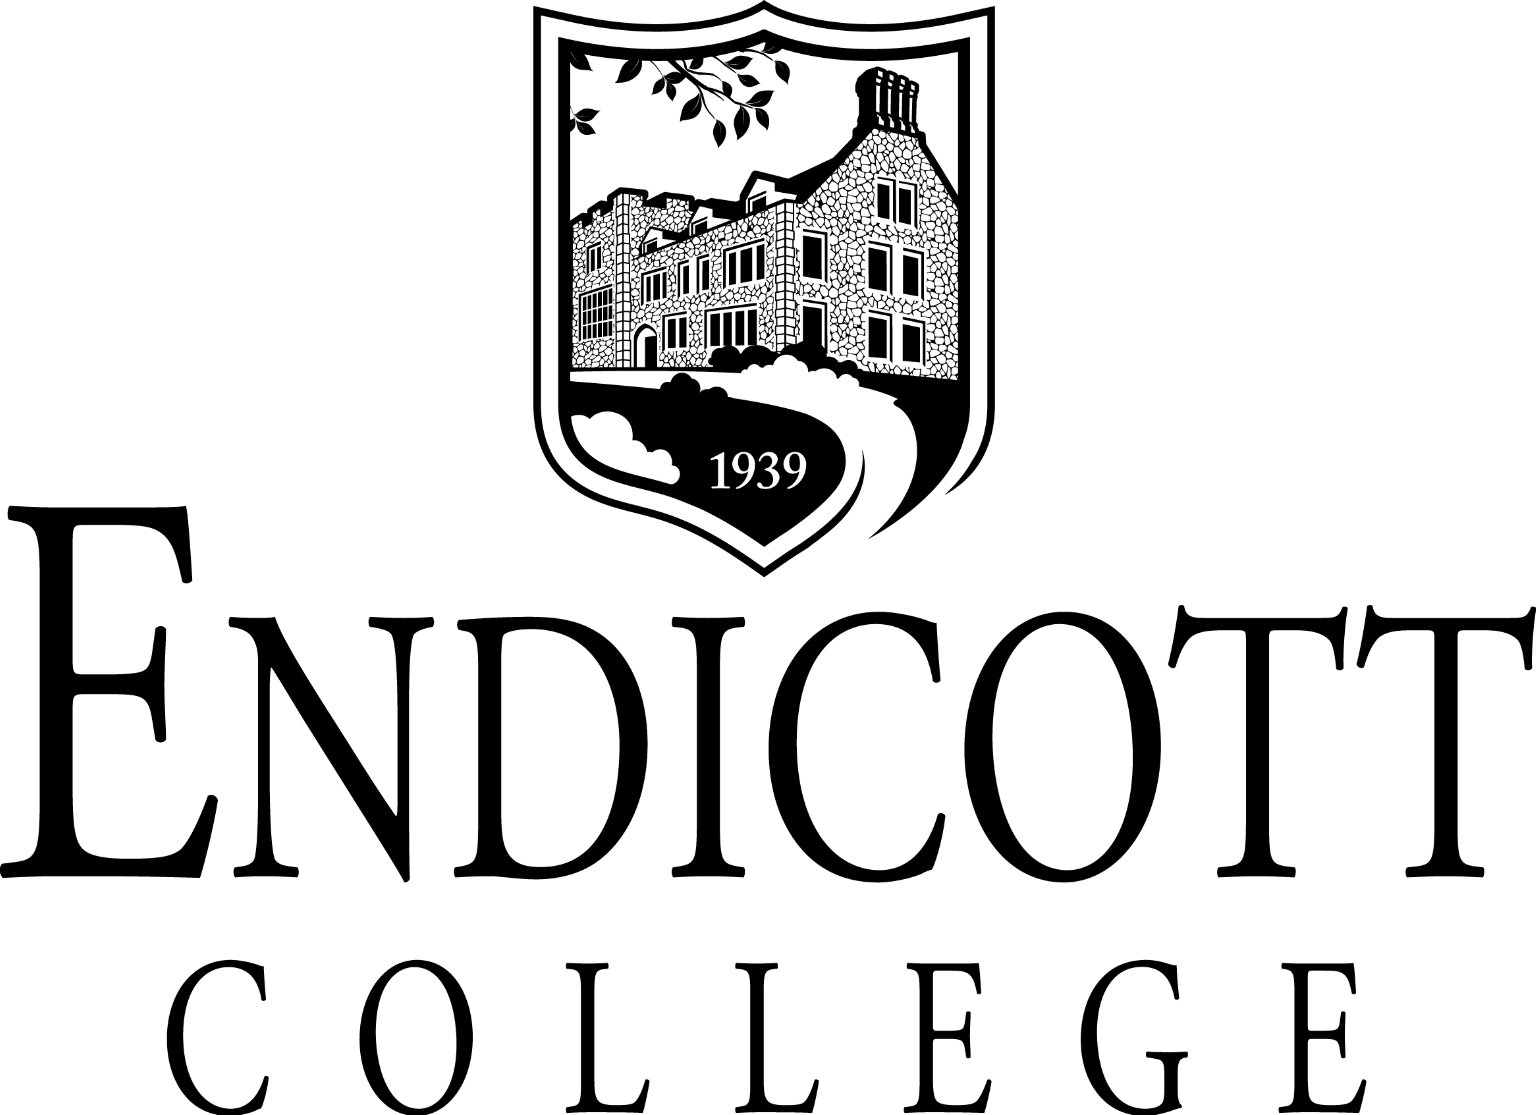 Endicott College (MA) logo